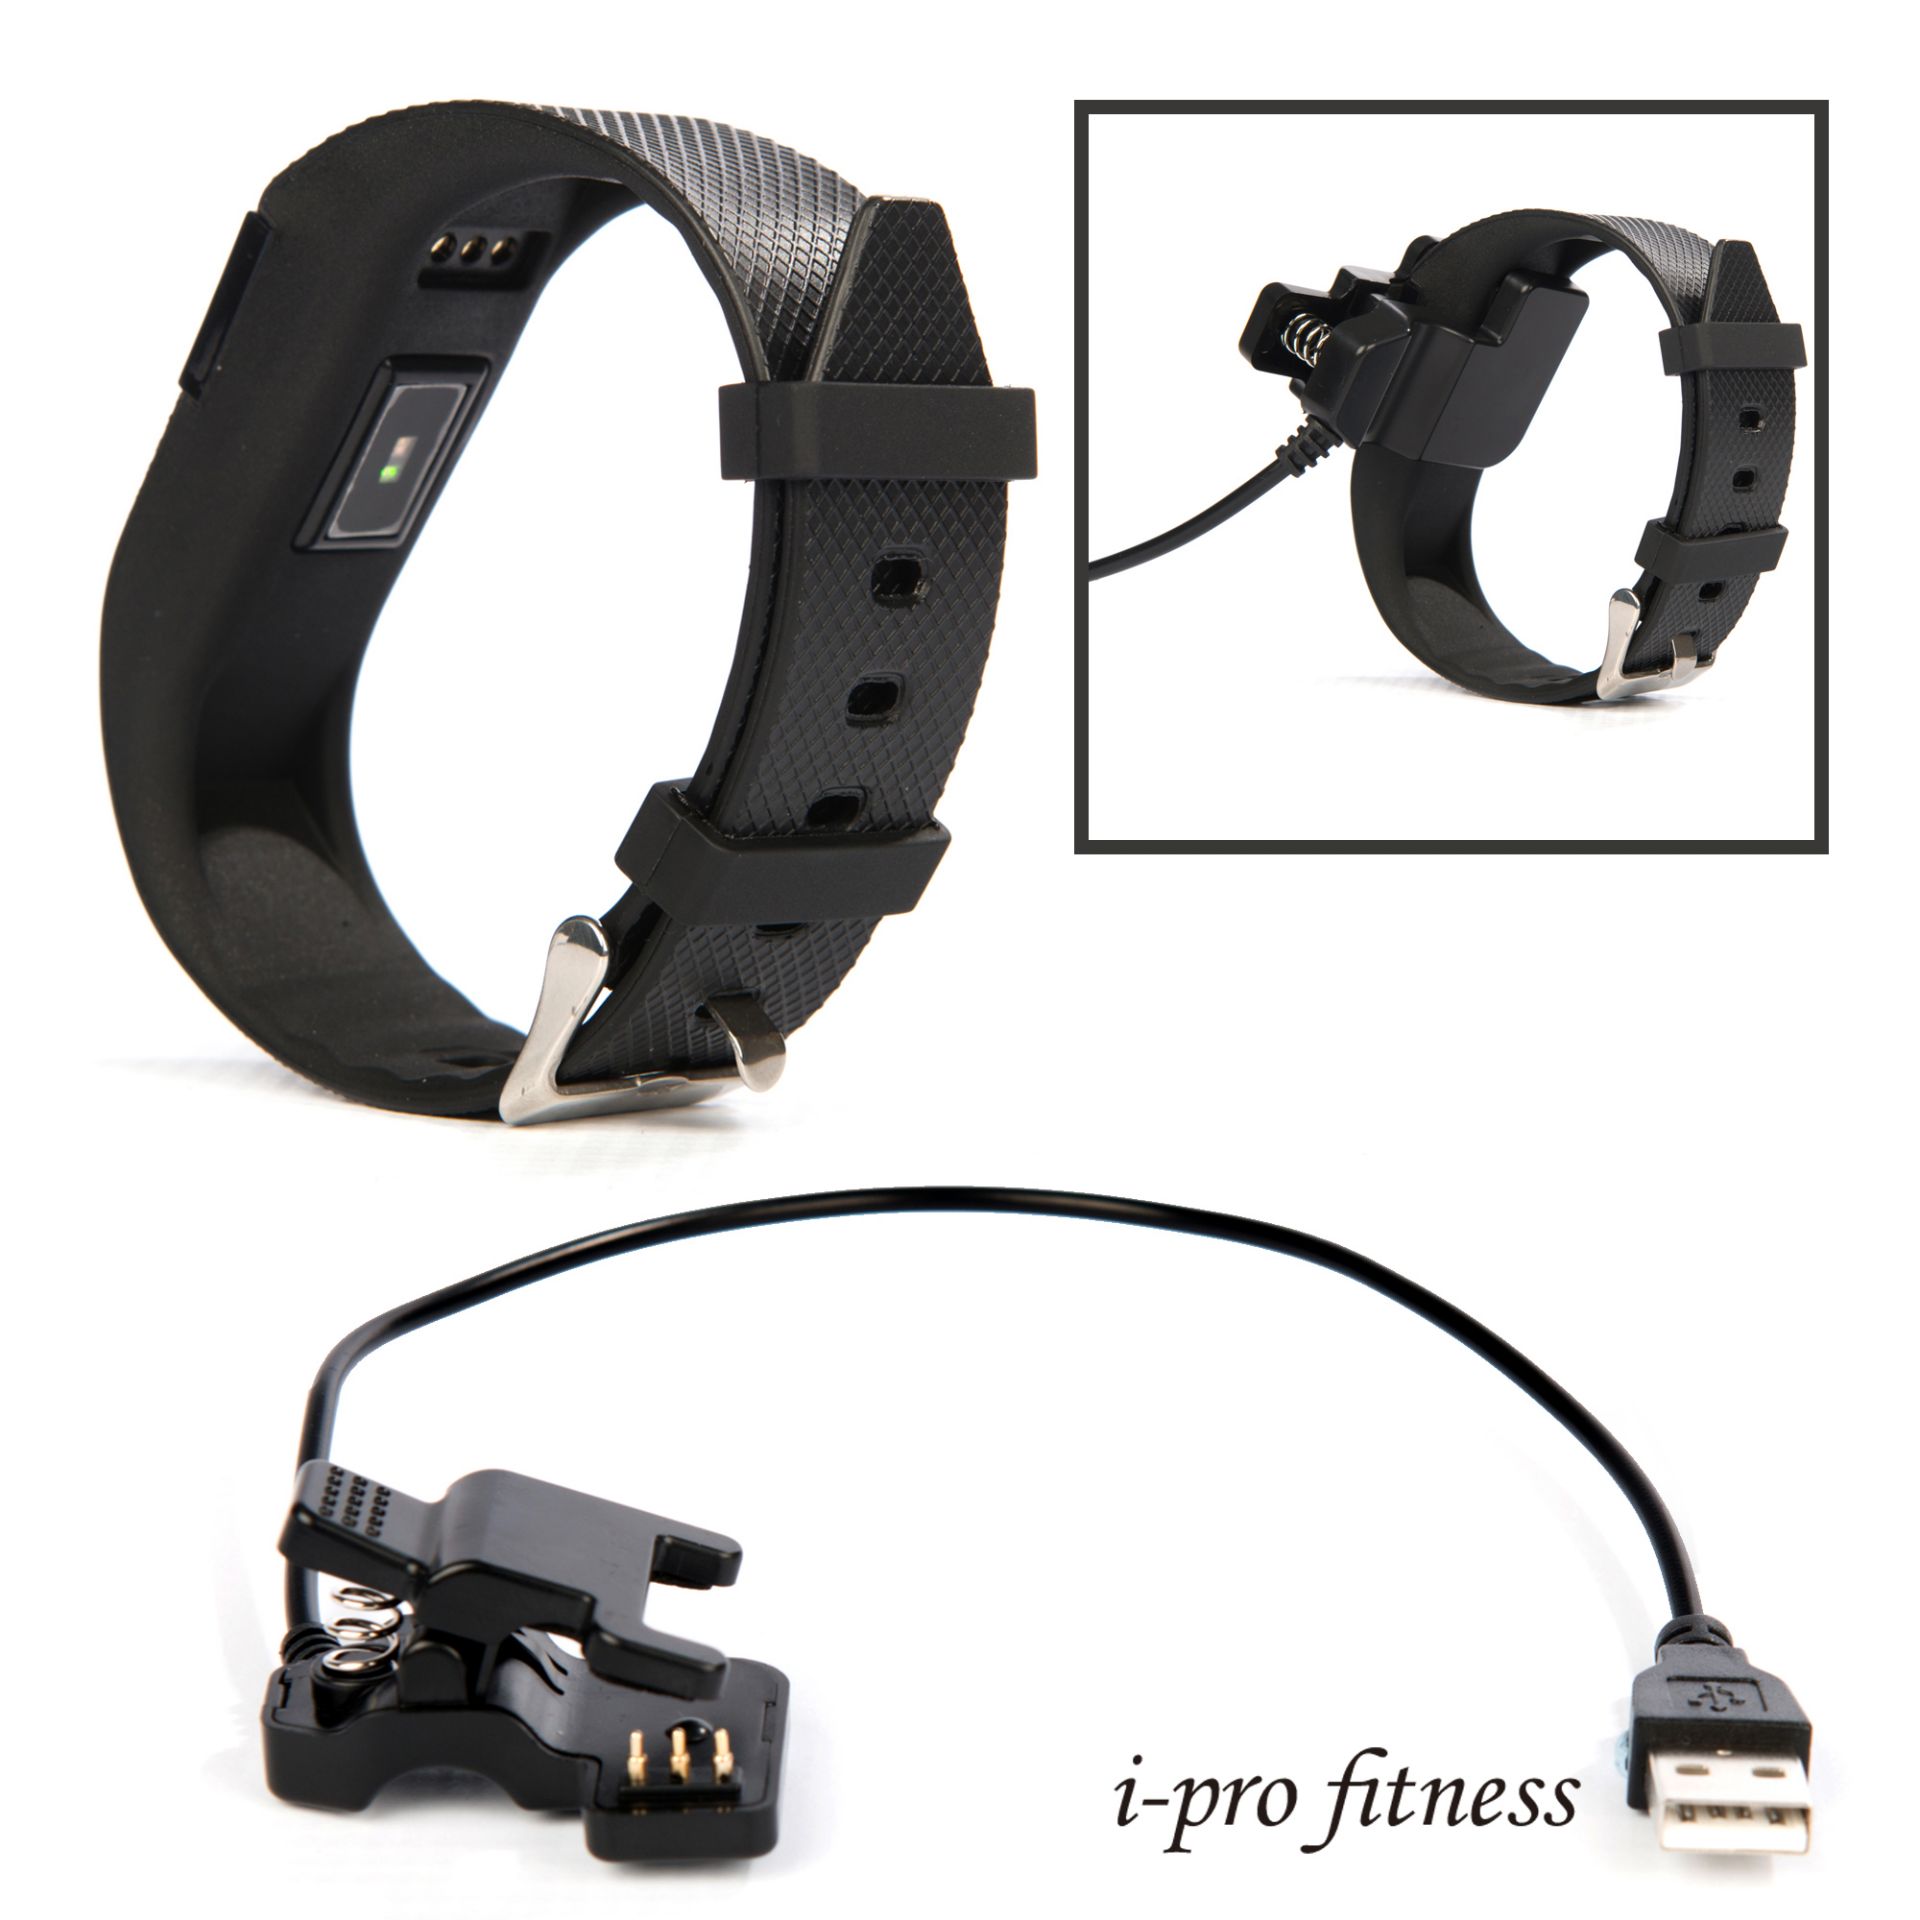 20x Fitness Tracker i-pro fitness, Bluetooth 4.0 Sports Smart Bracelet, Heart Rate Monitor, - Image 6 of 8